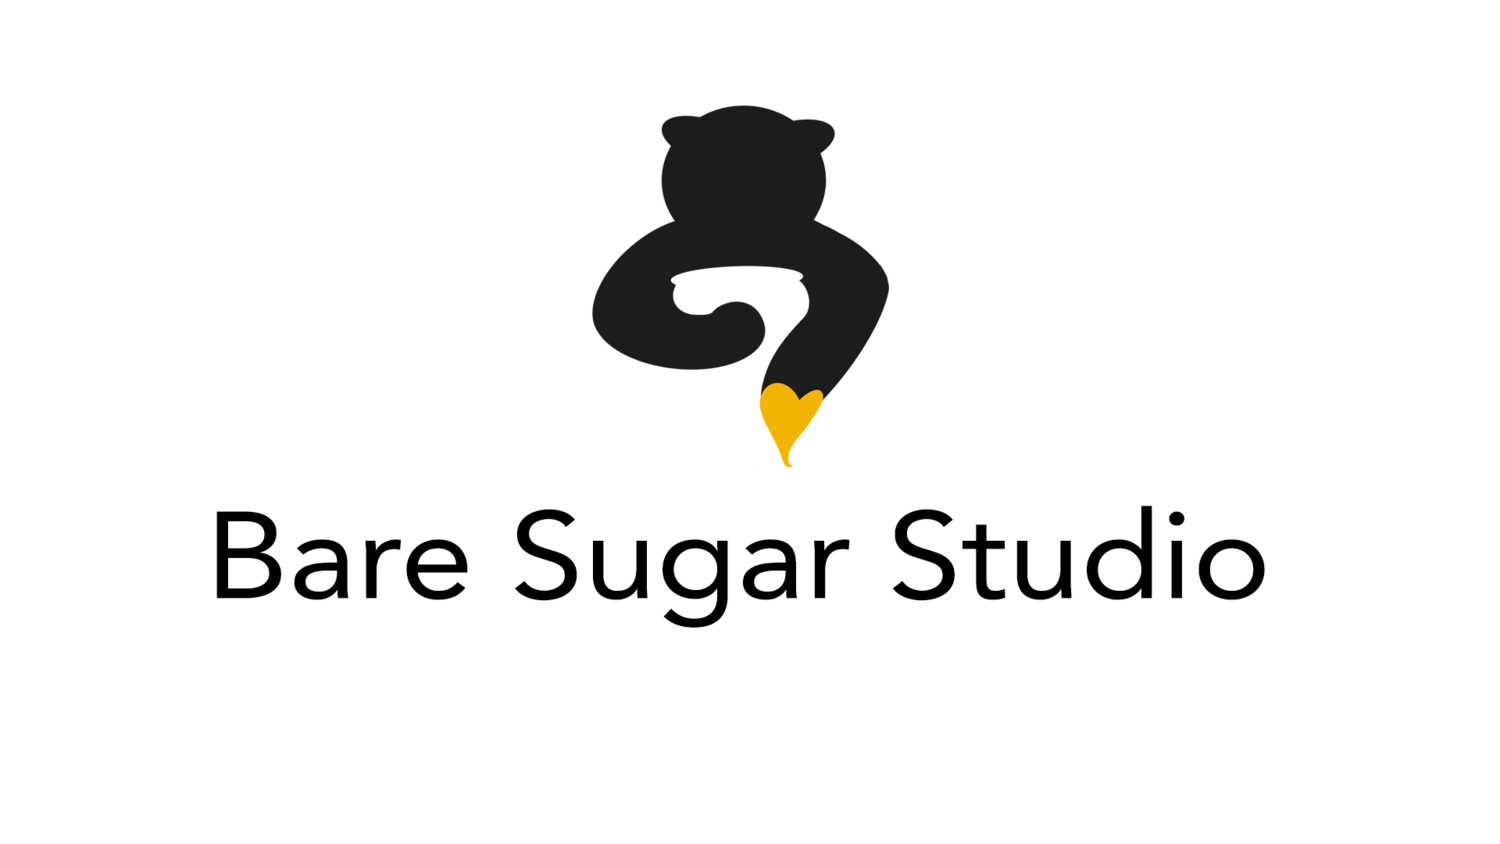 Bare Sugar Studio